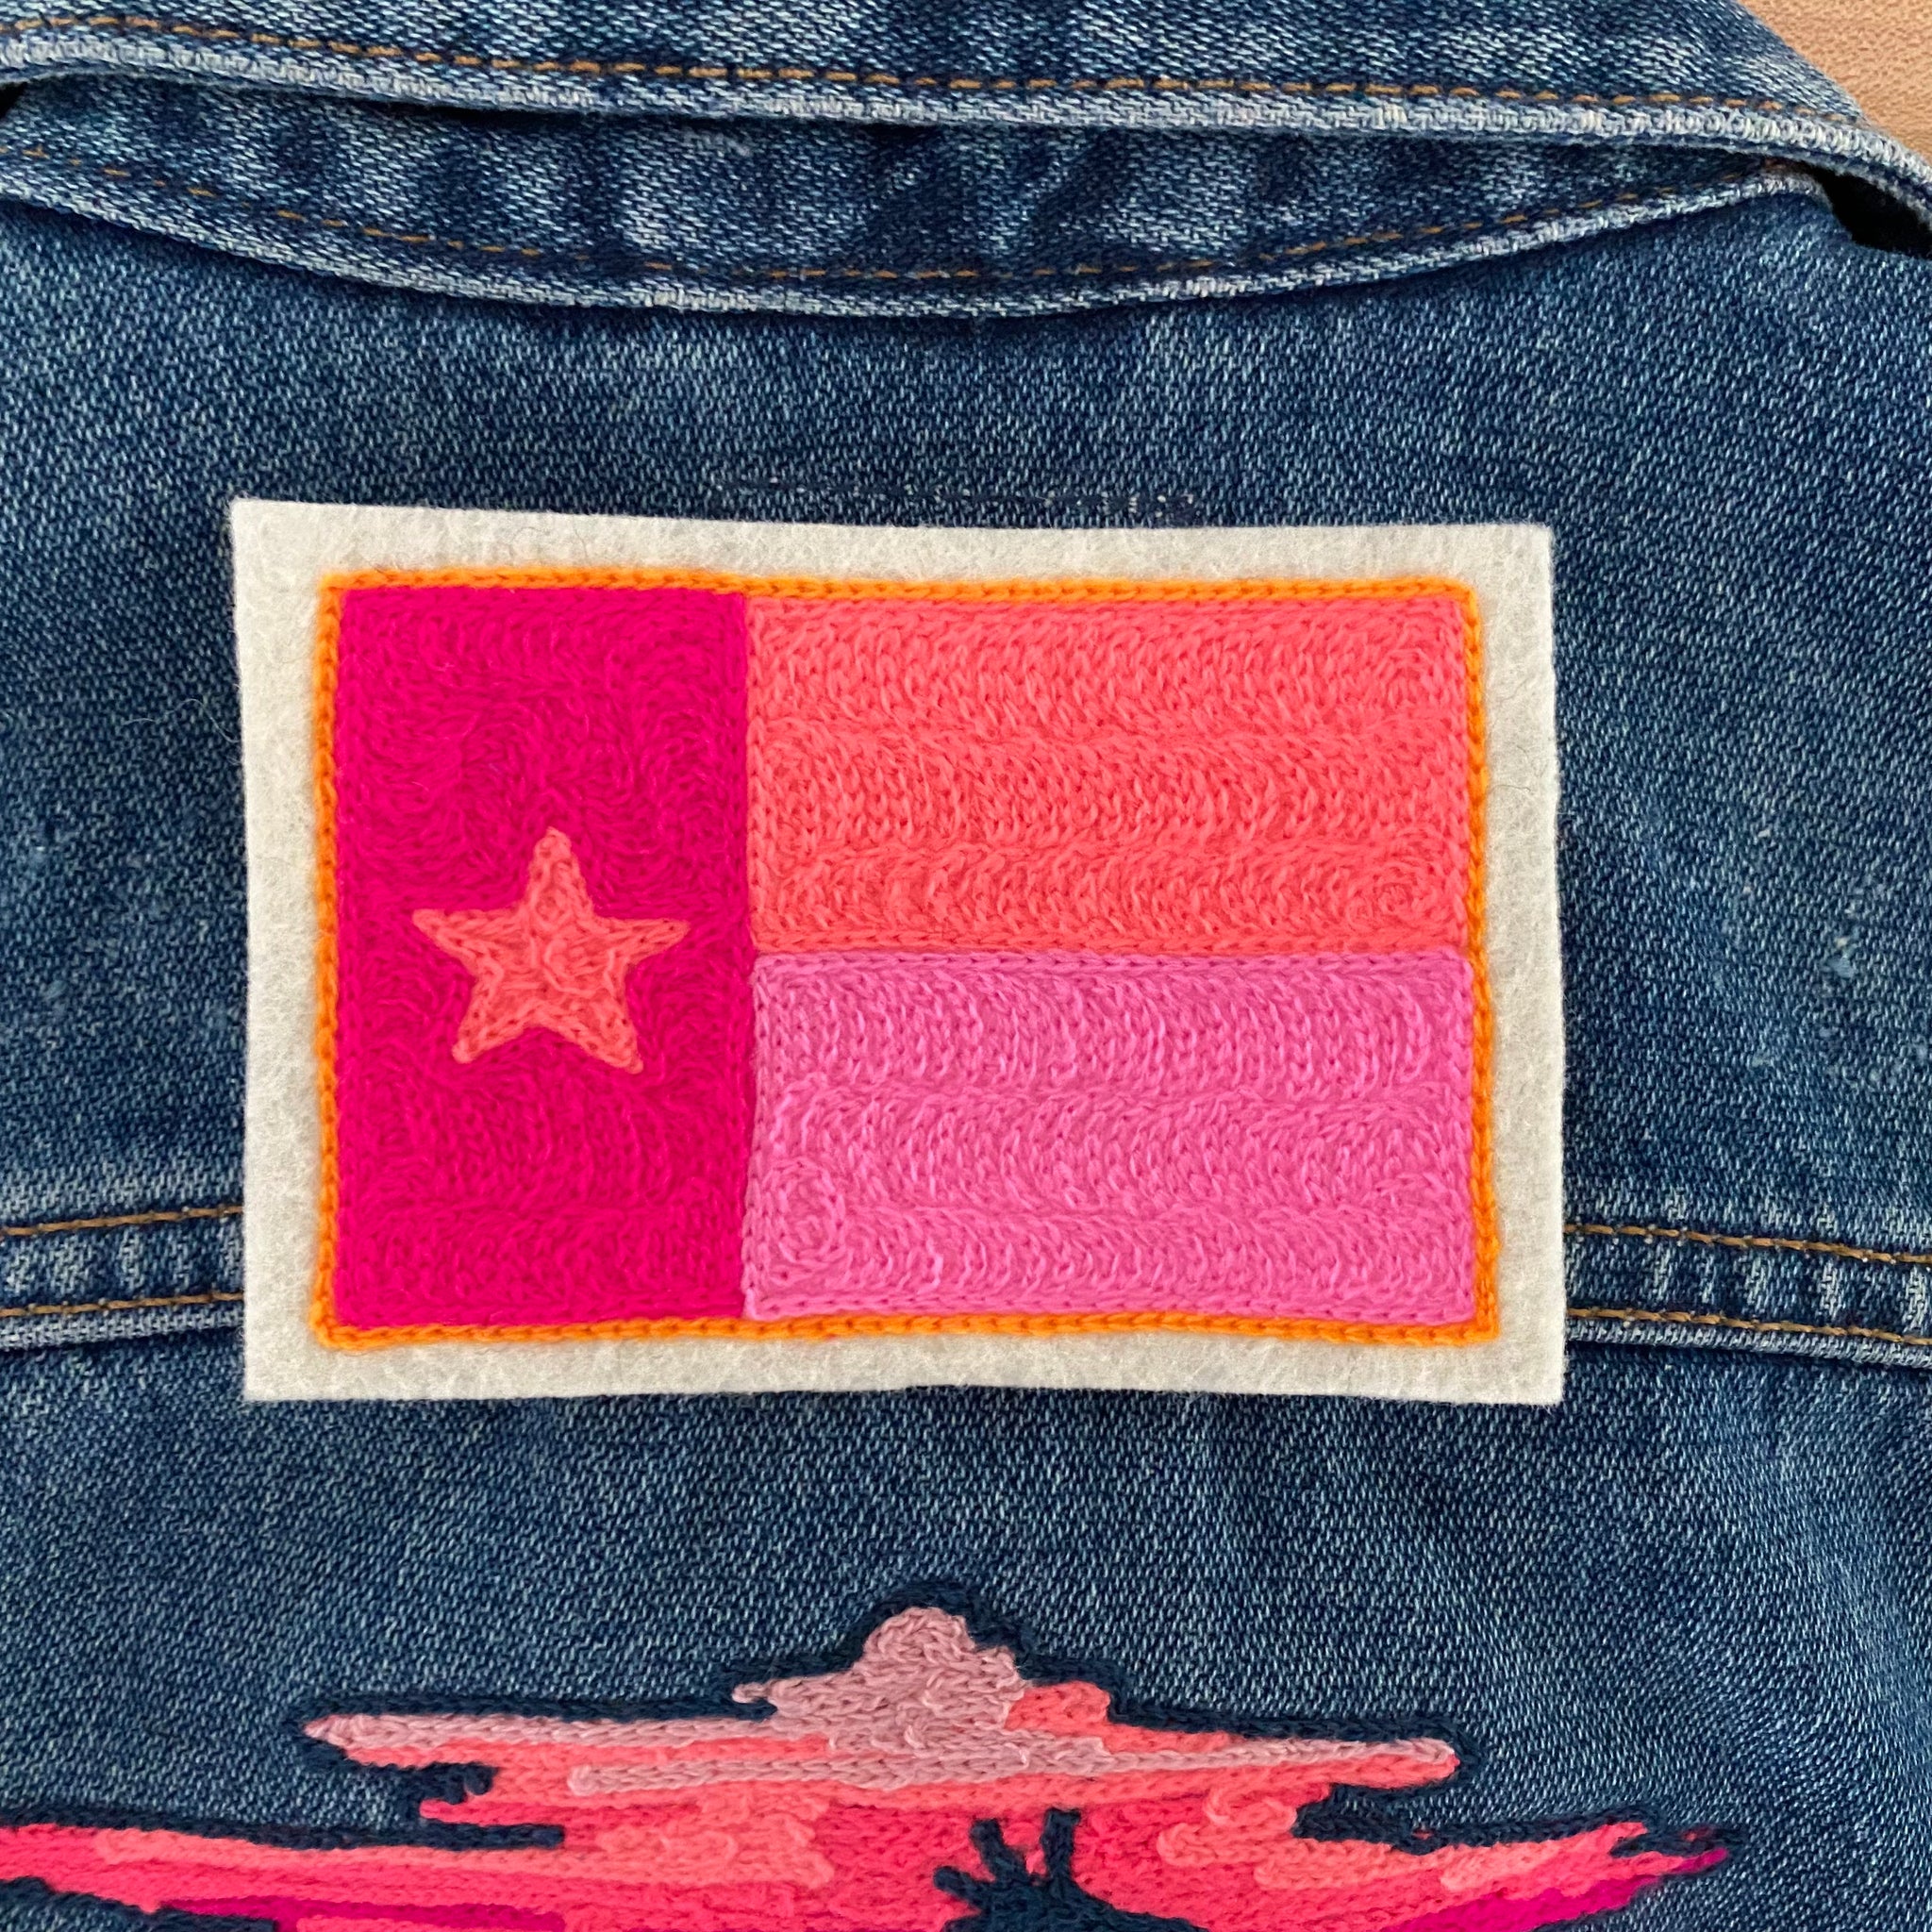 Texas Flag Patch